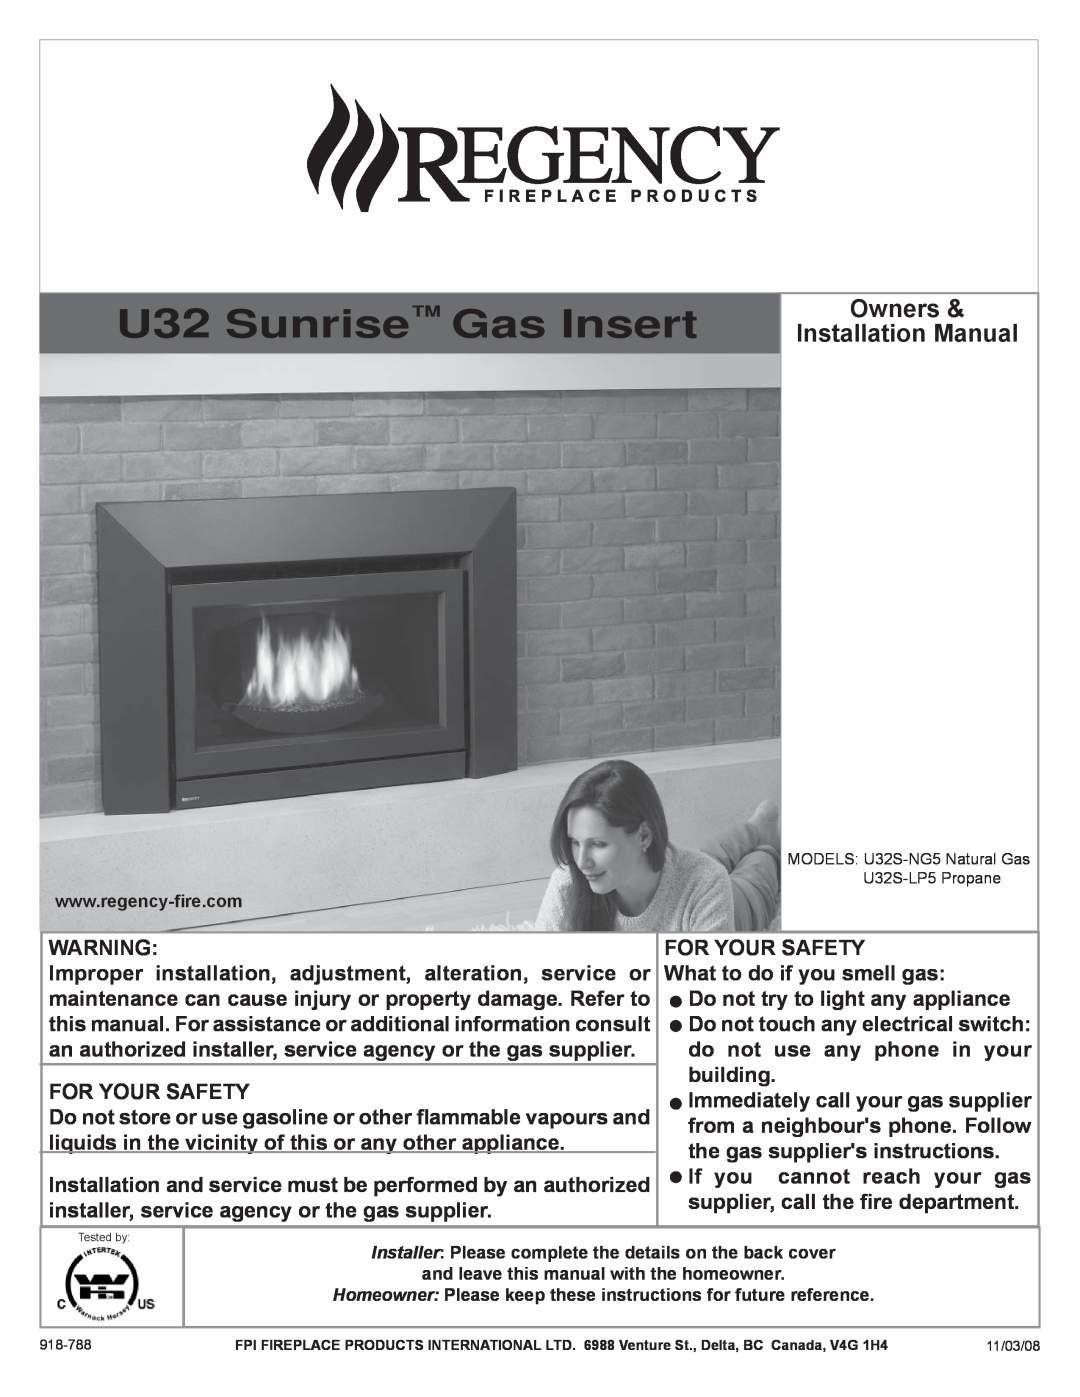 Regency U32S-LP5, U32S-NG5 installation manual U32 Sunrise Gas Insert, Owners, Installation Manual, 918-788 